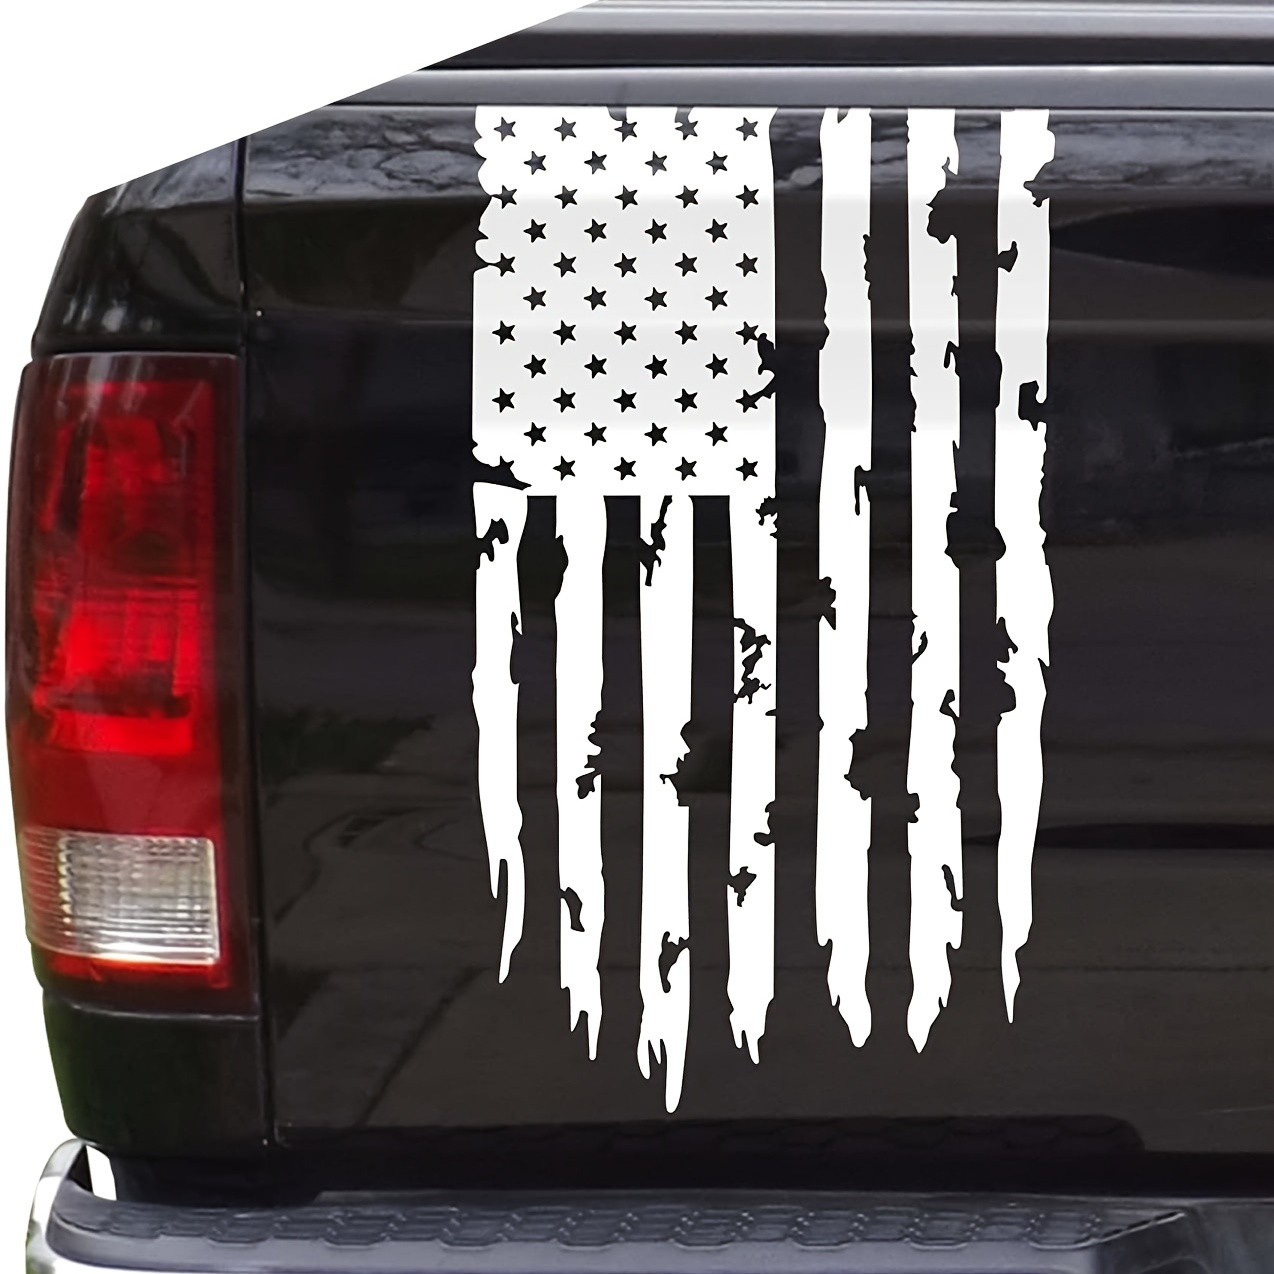  Fishing Rod American Flag Vinyl Decal - Patriotic Bumper  Sticker - Perfect for Laptops Tumblers Windows Cars Trucks Walls :  Automotive